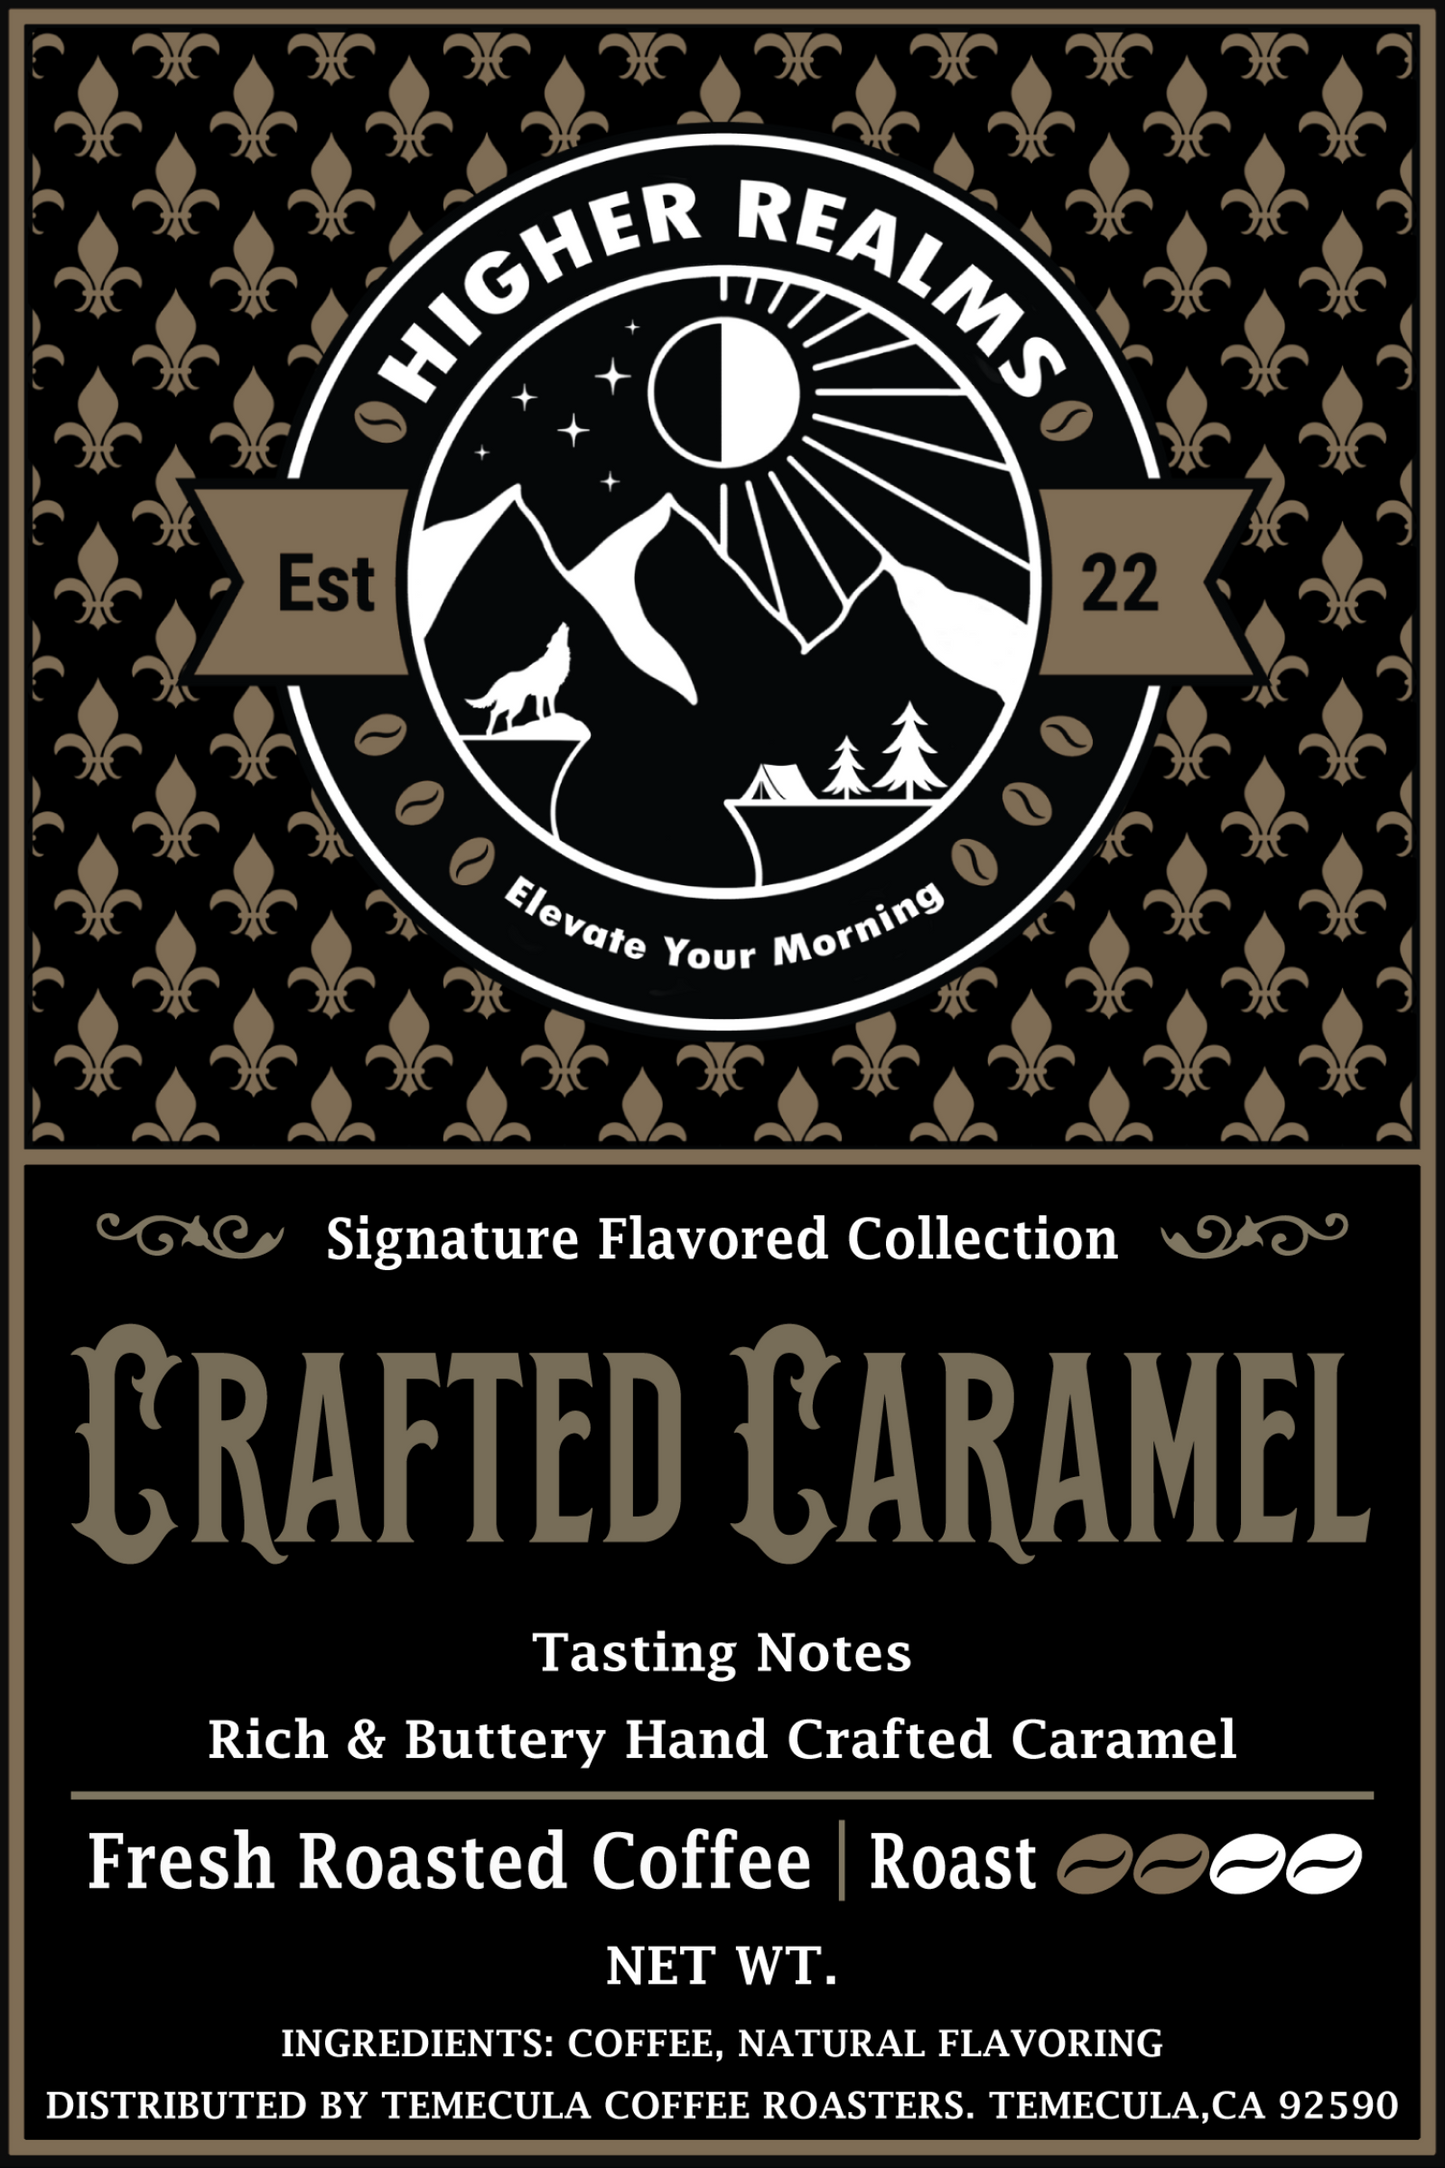 Crafted Caramel